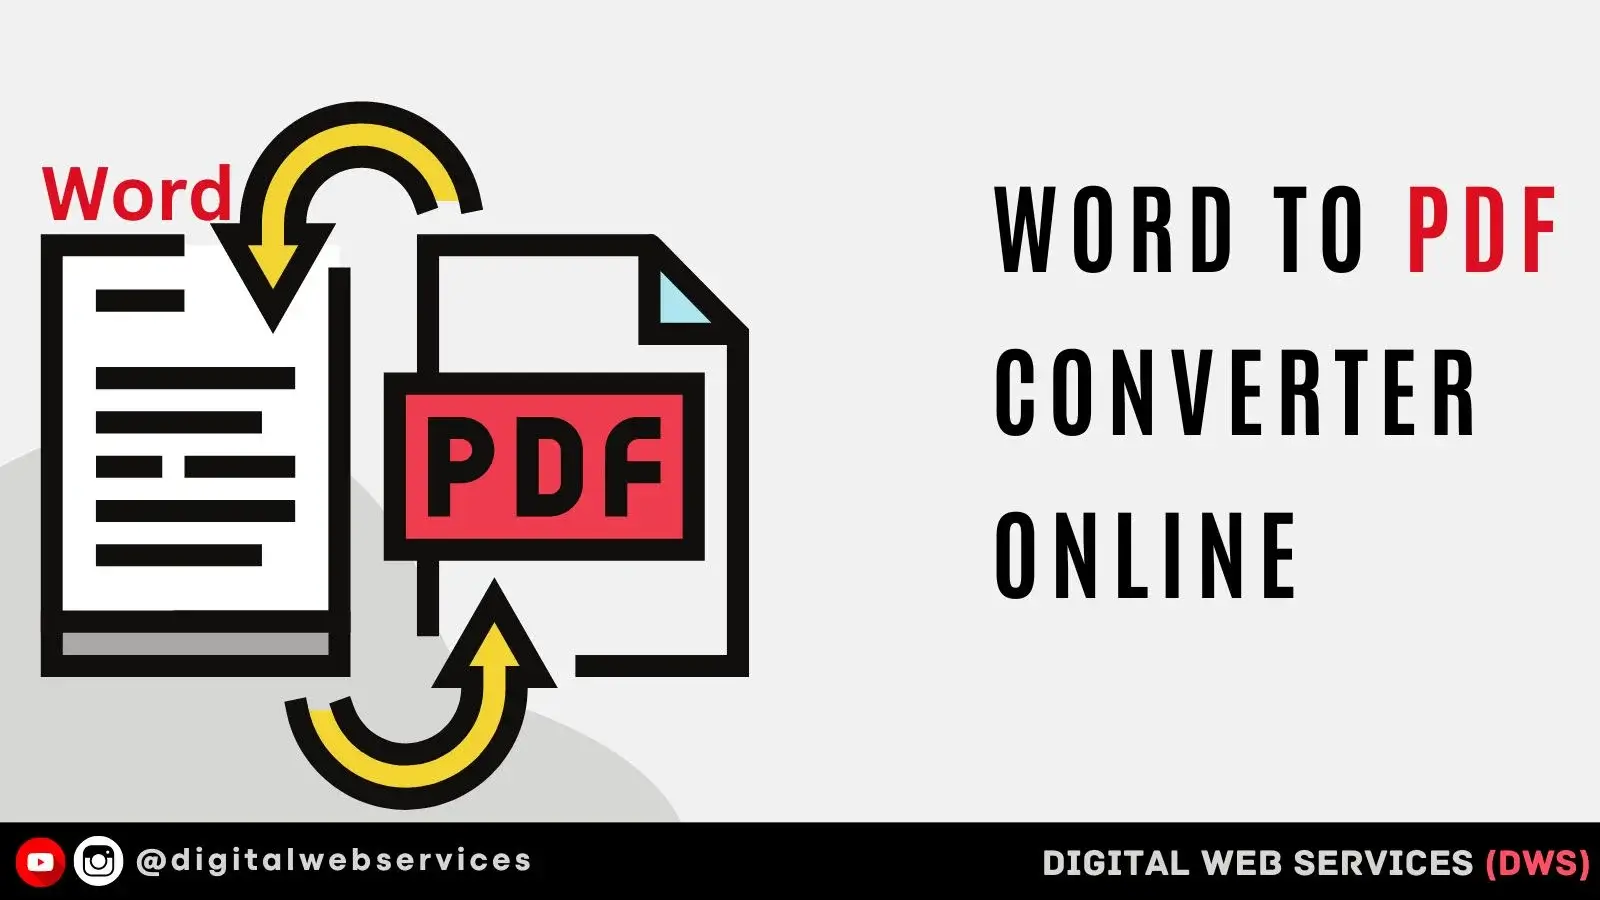 Word to PDF Converter Online